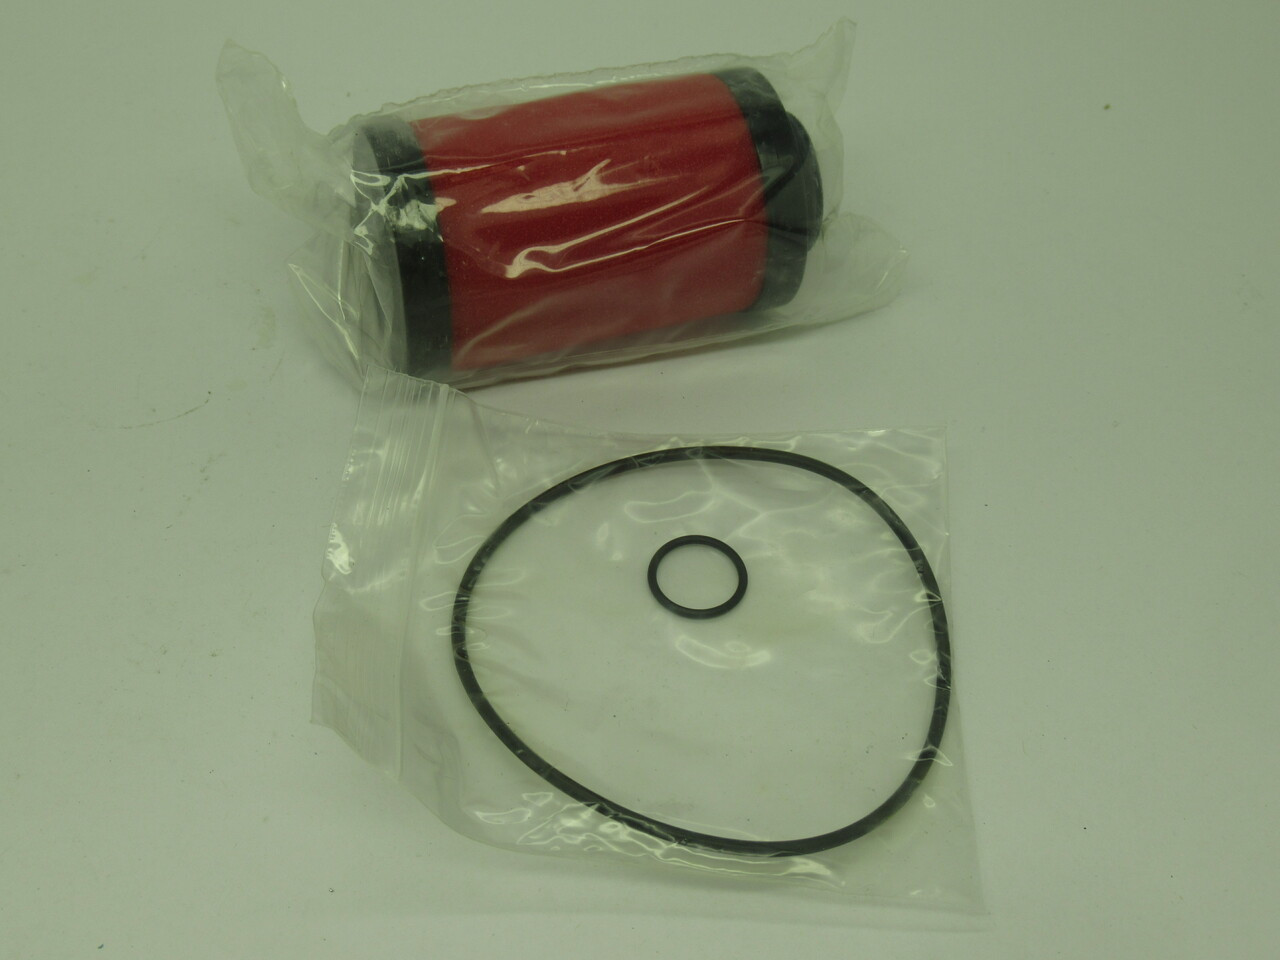 Pentair FEK017AAYE-CB Filter Kit Red 3 1/2" Length 2" Diameter NEW